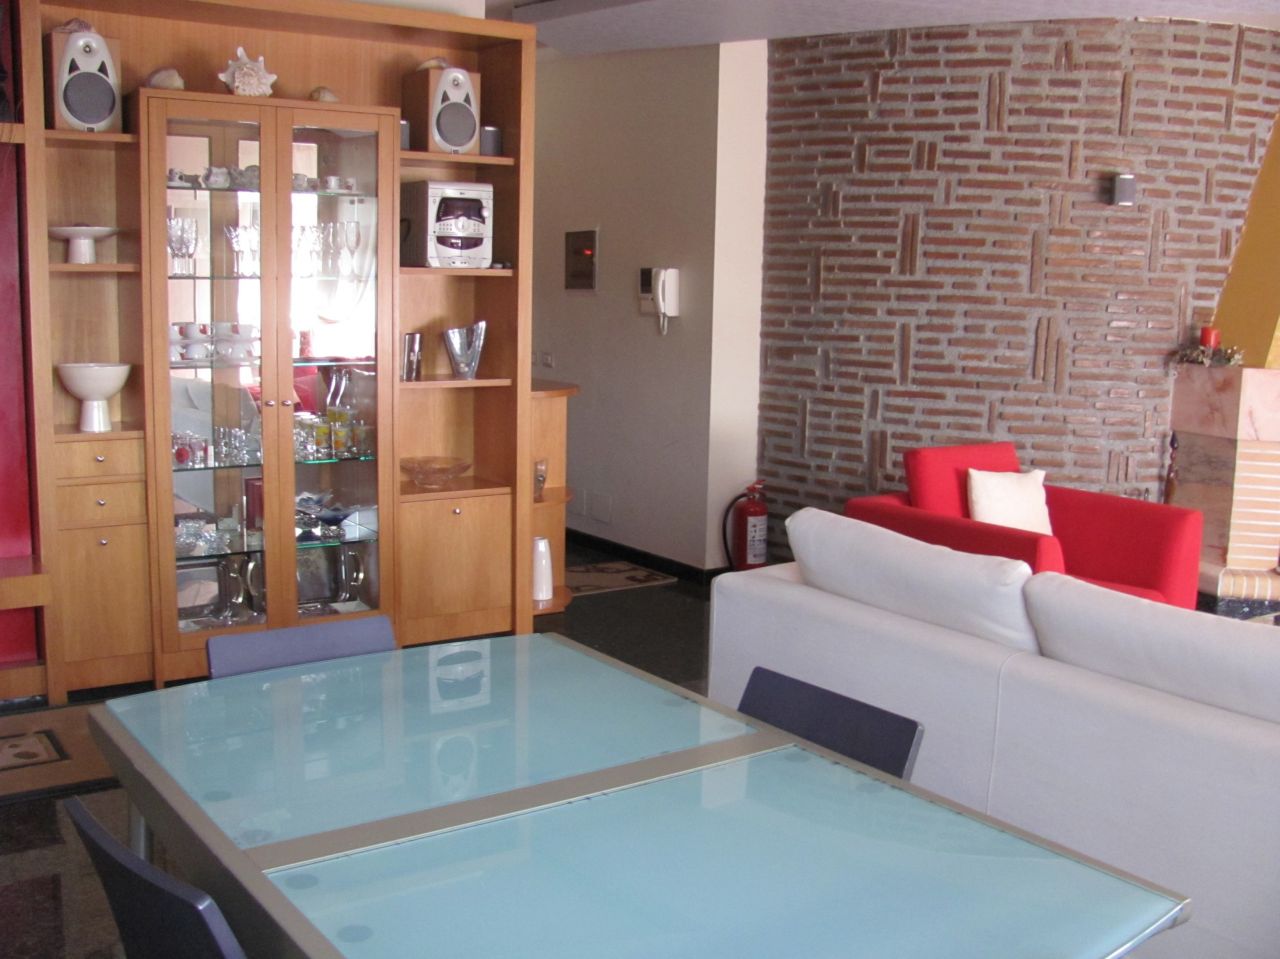 Three bedroom apartment for rent in a prestigious location in Tirana